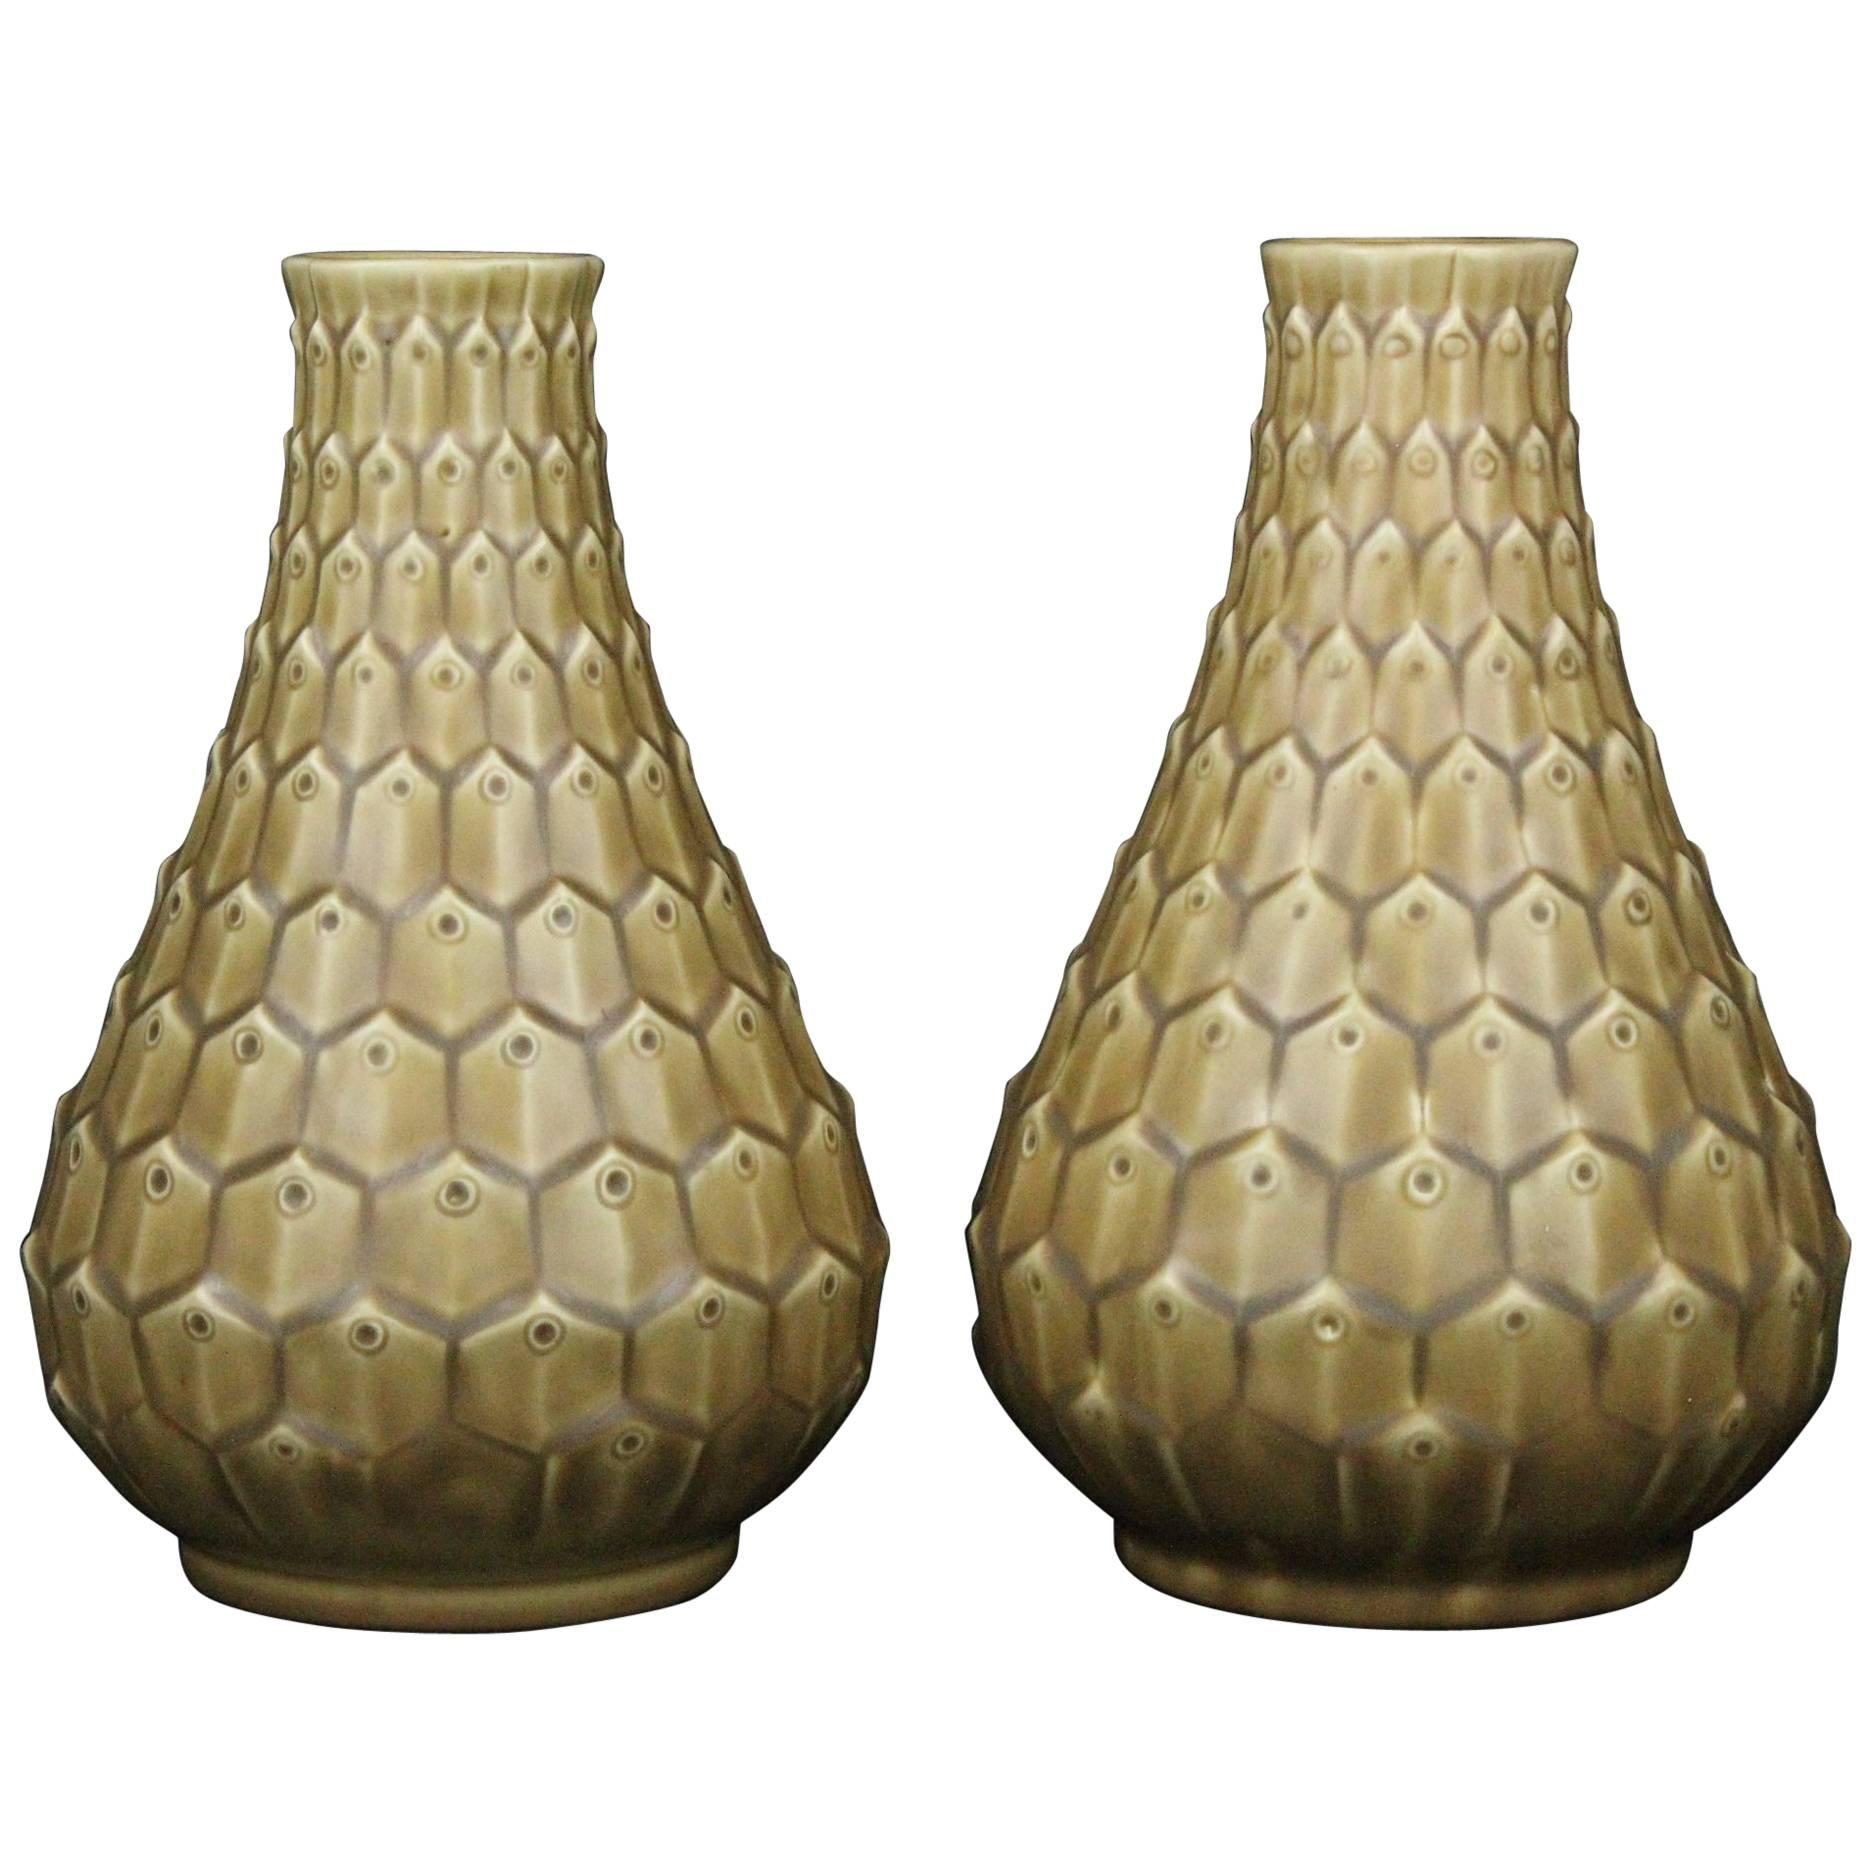 Pair of Very Unusual Peacock Pattern Vases by Ewald Dahlskog for Bo Fajans